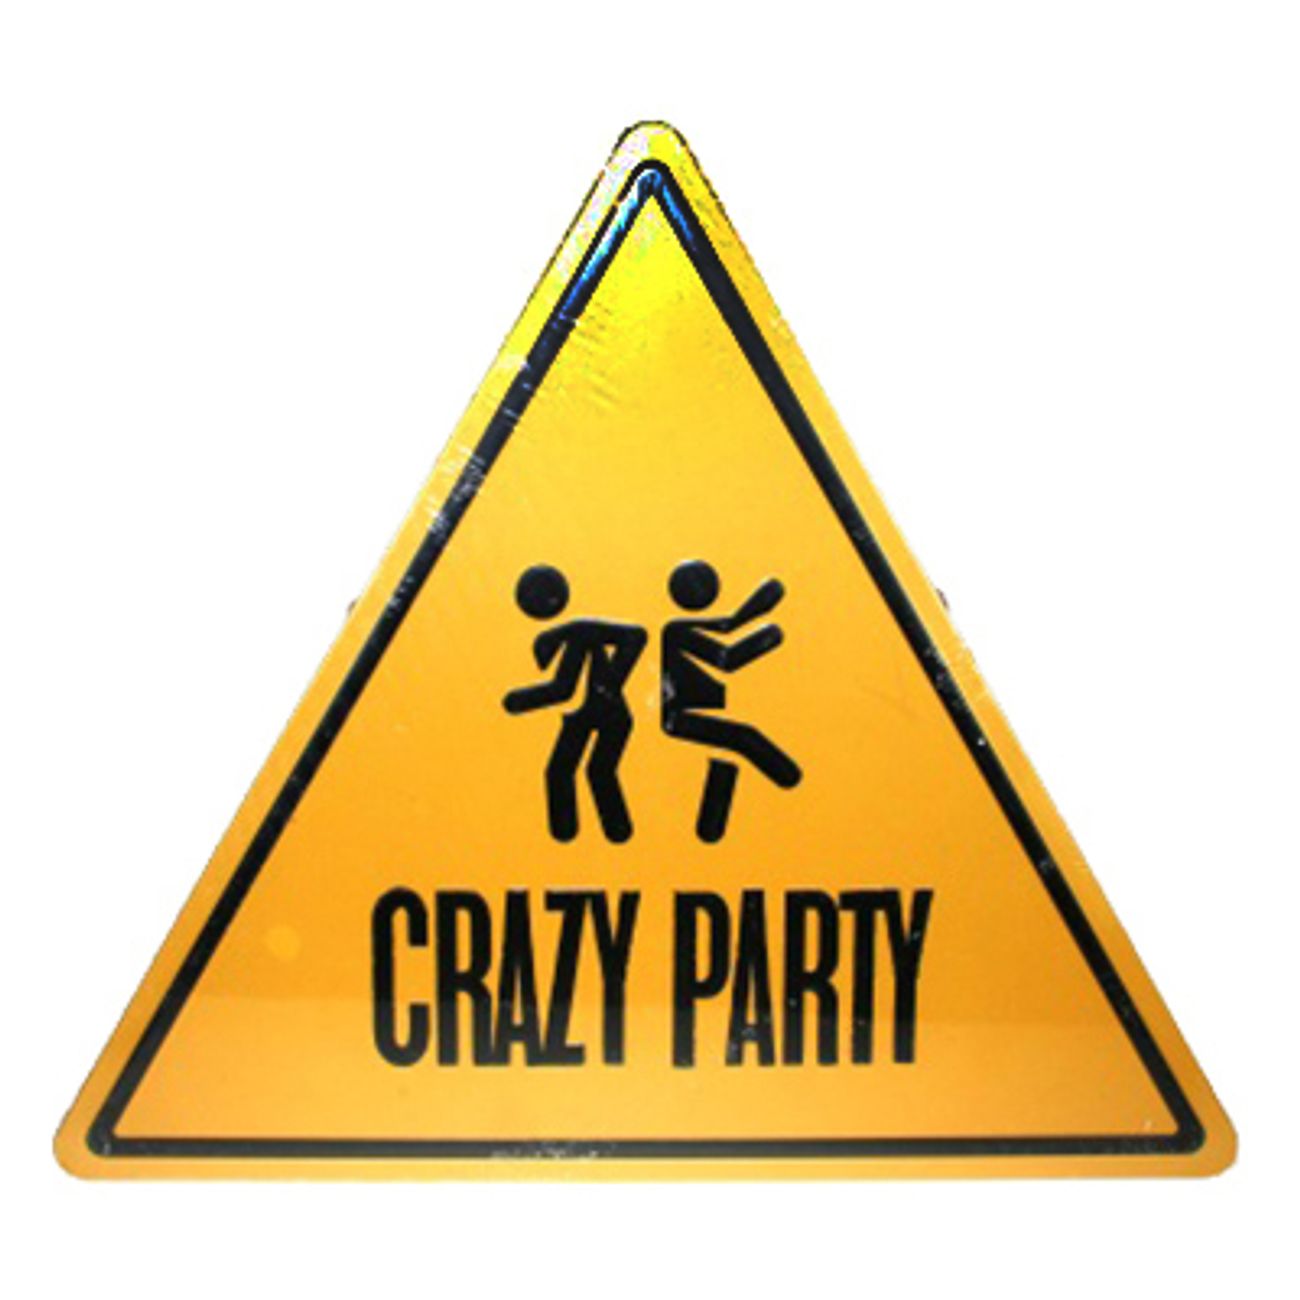 platskylt-crazy-party-1